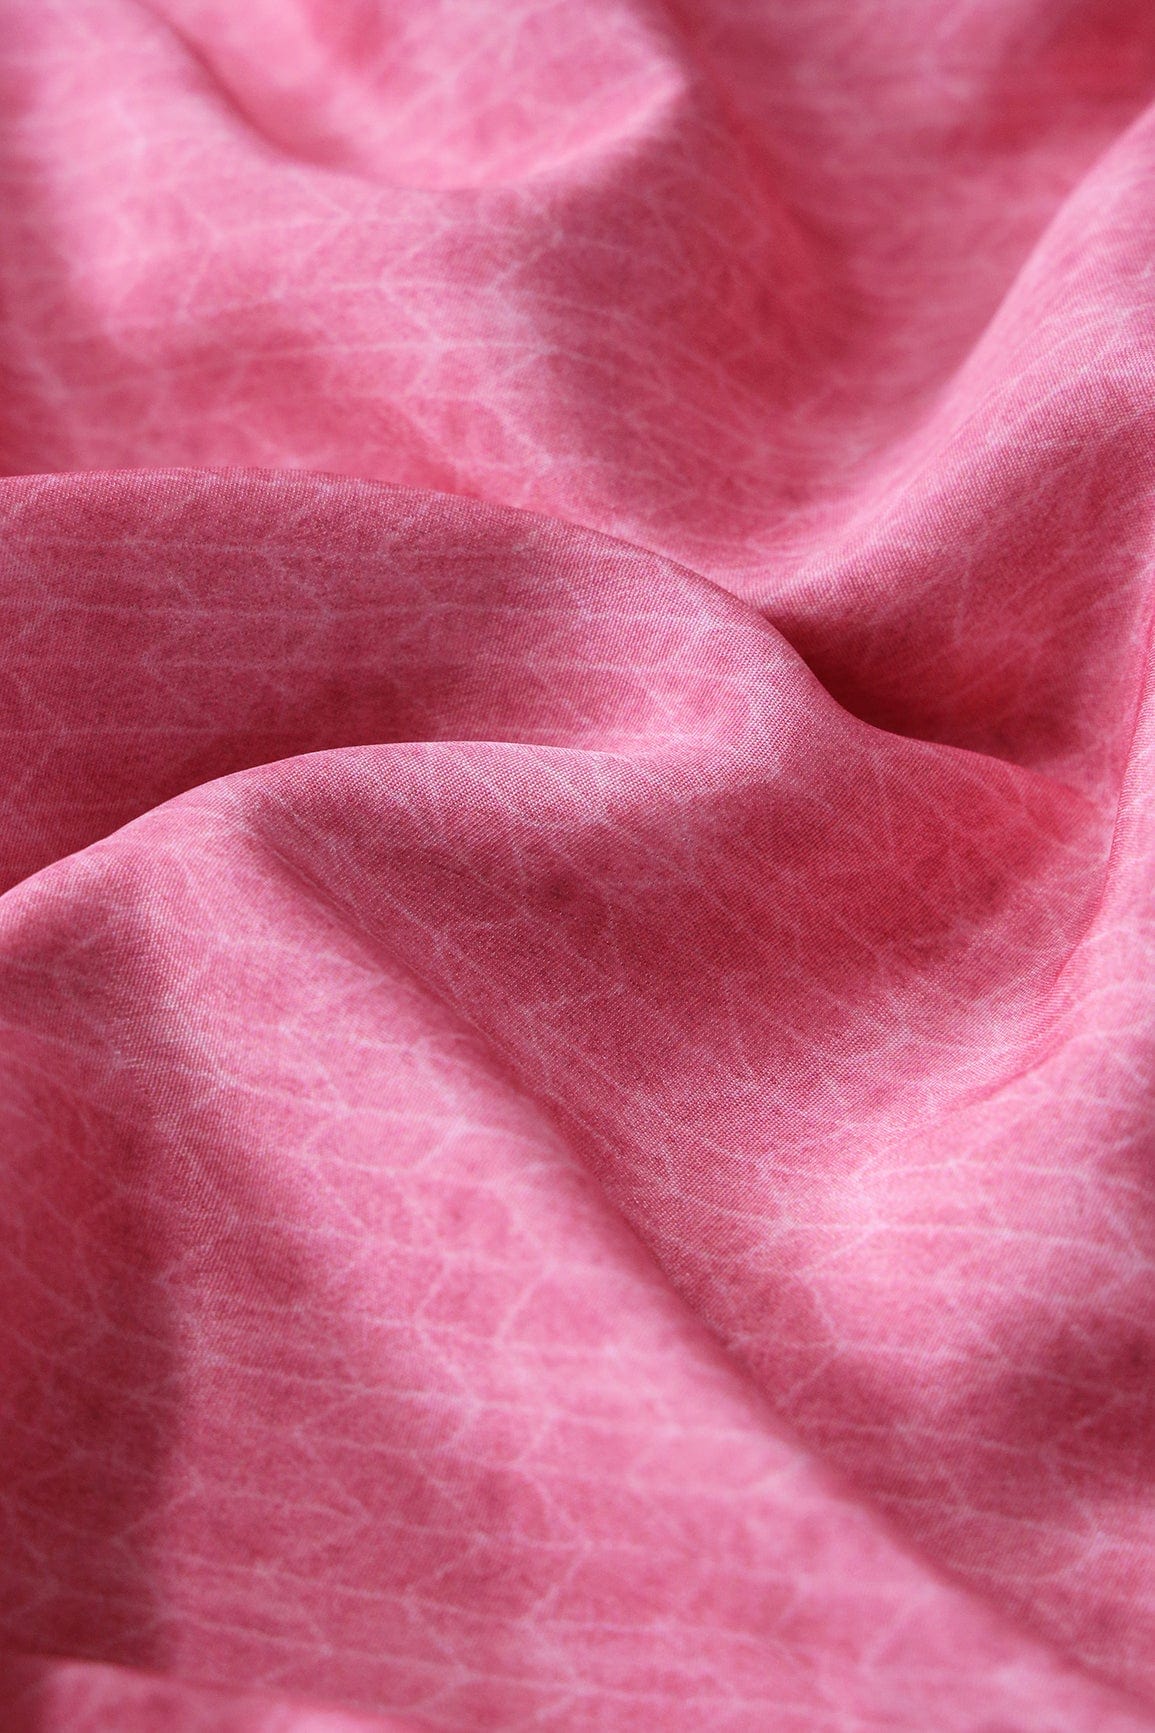 doeraa Prints Pink Chevron Pattern Digital Print On French Crepe Fabric